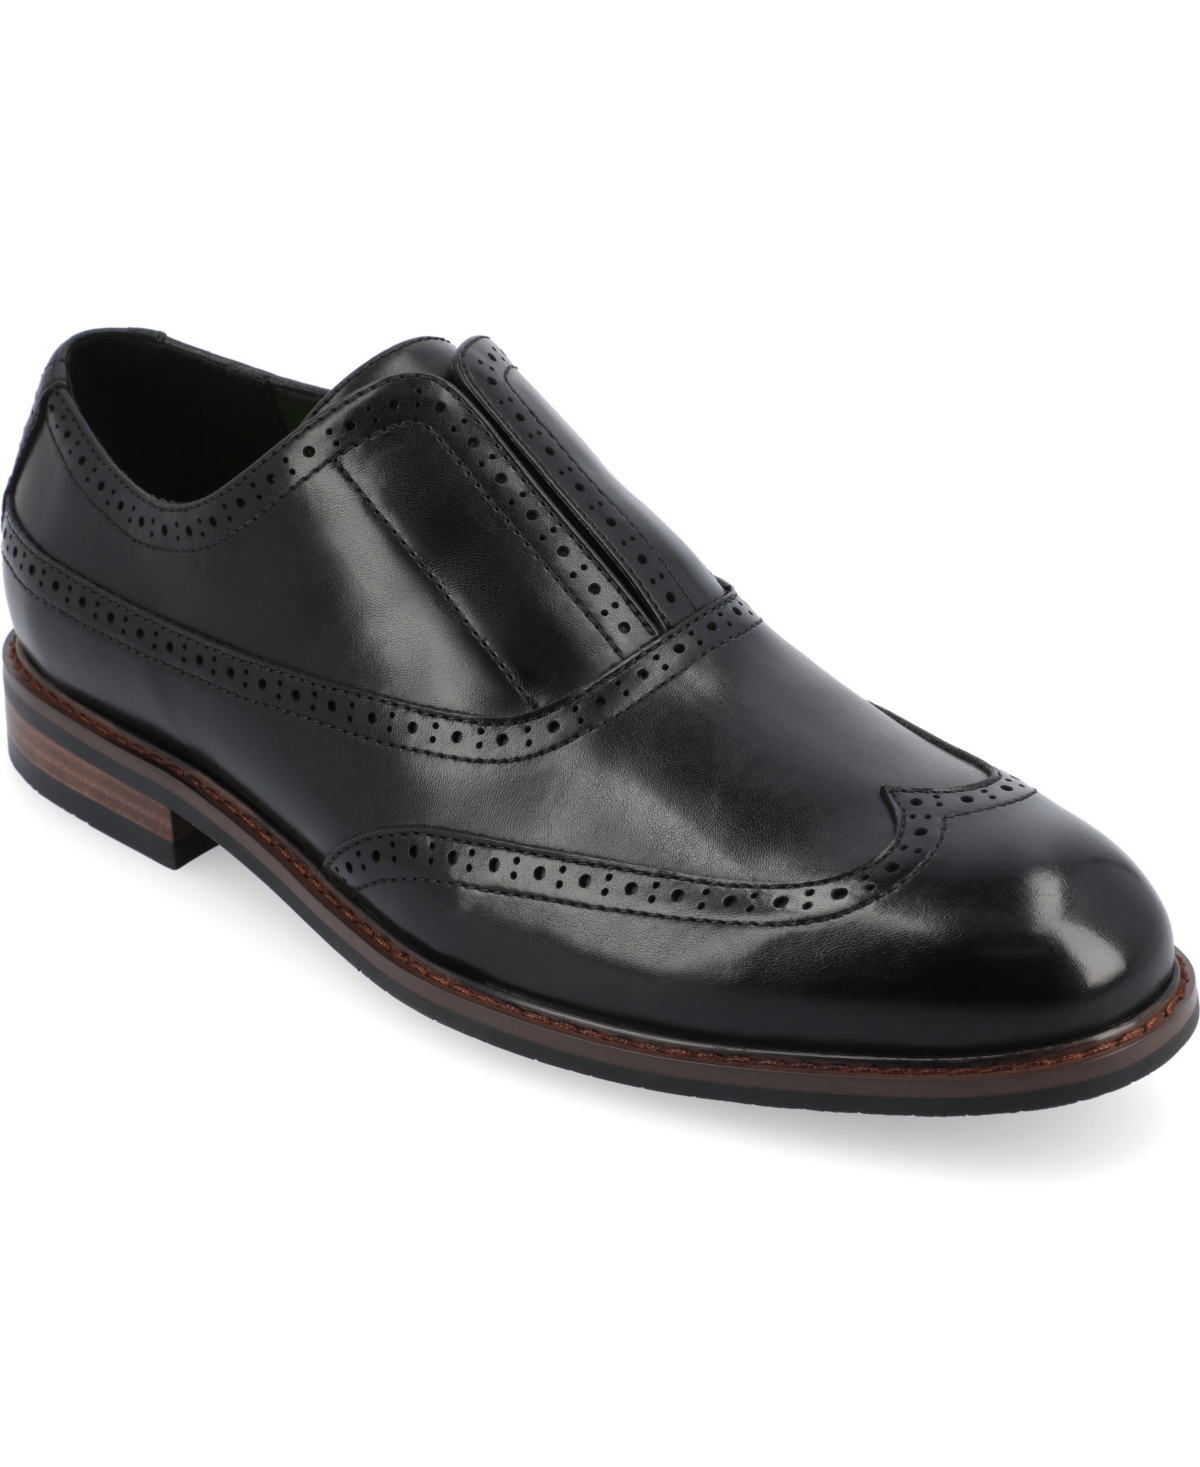 Men's Nikola Tru Comfort Foam Slip-On Oxford Dress Shoes - Cognac